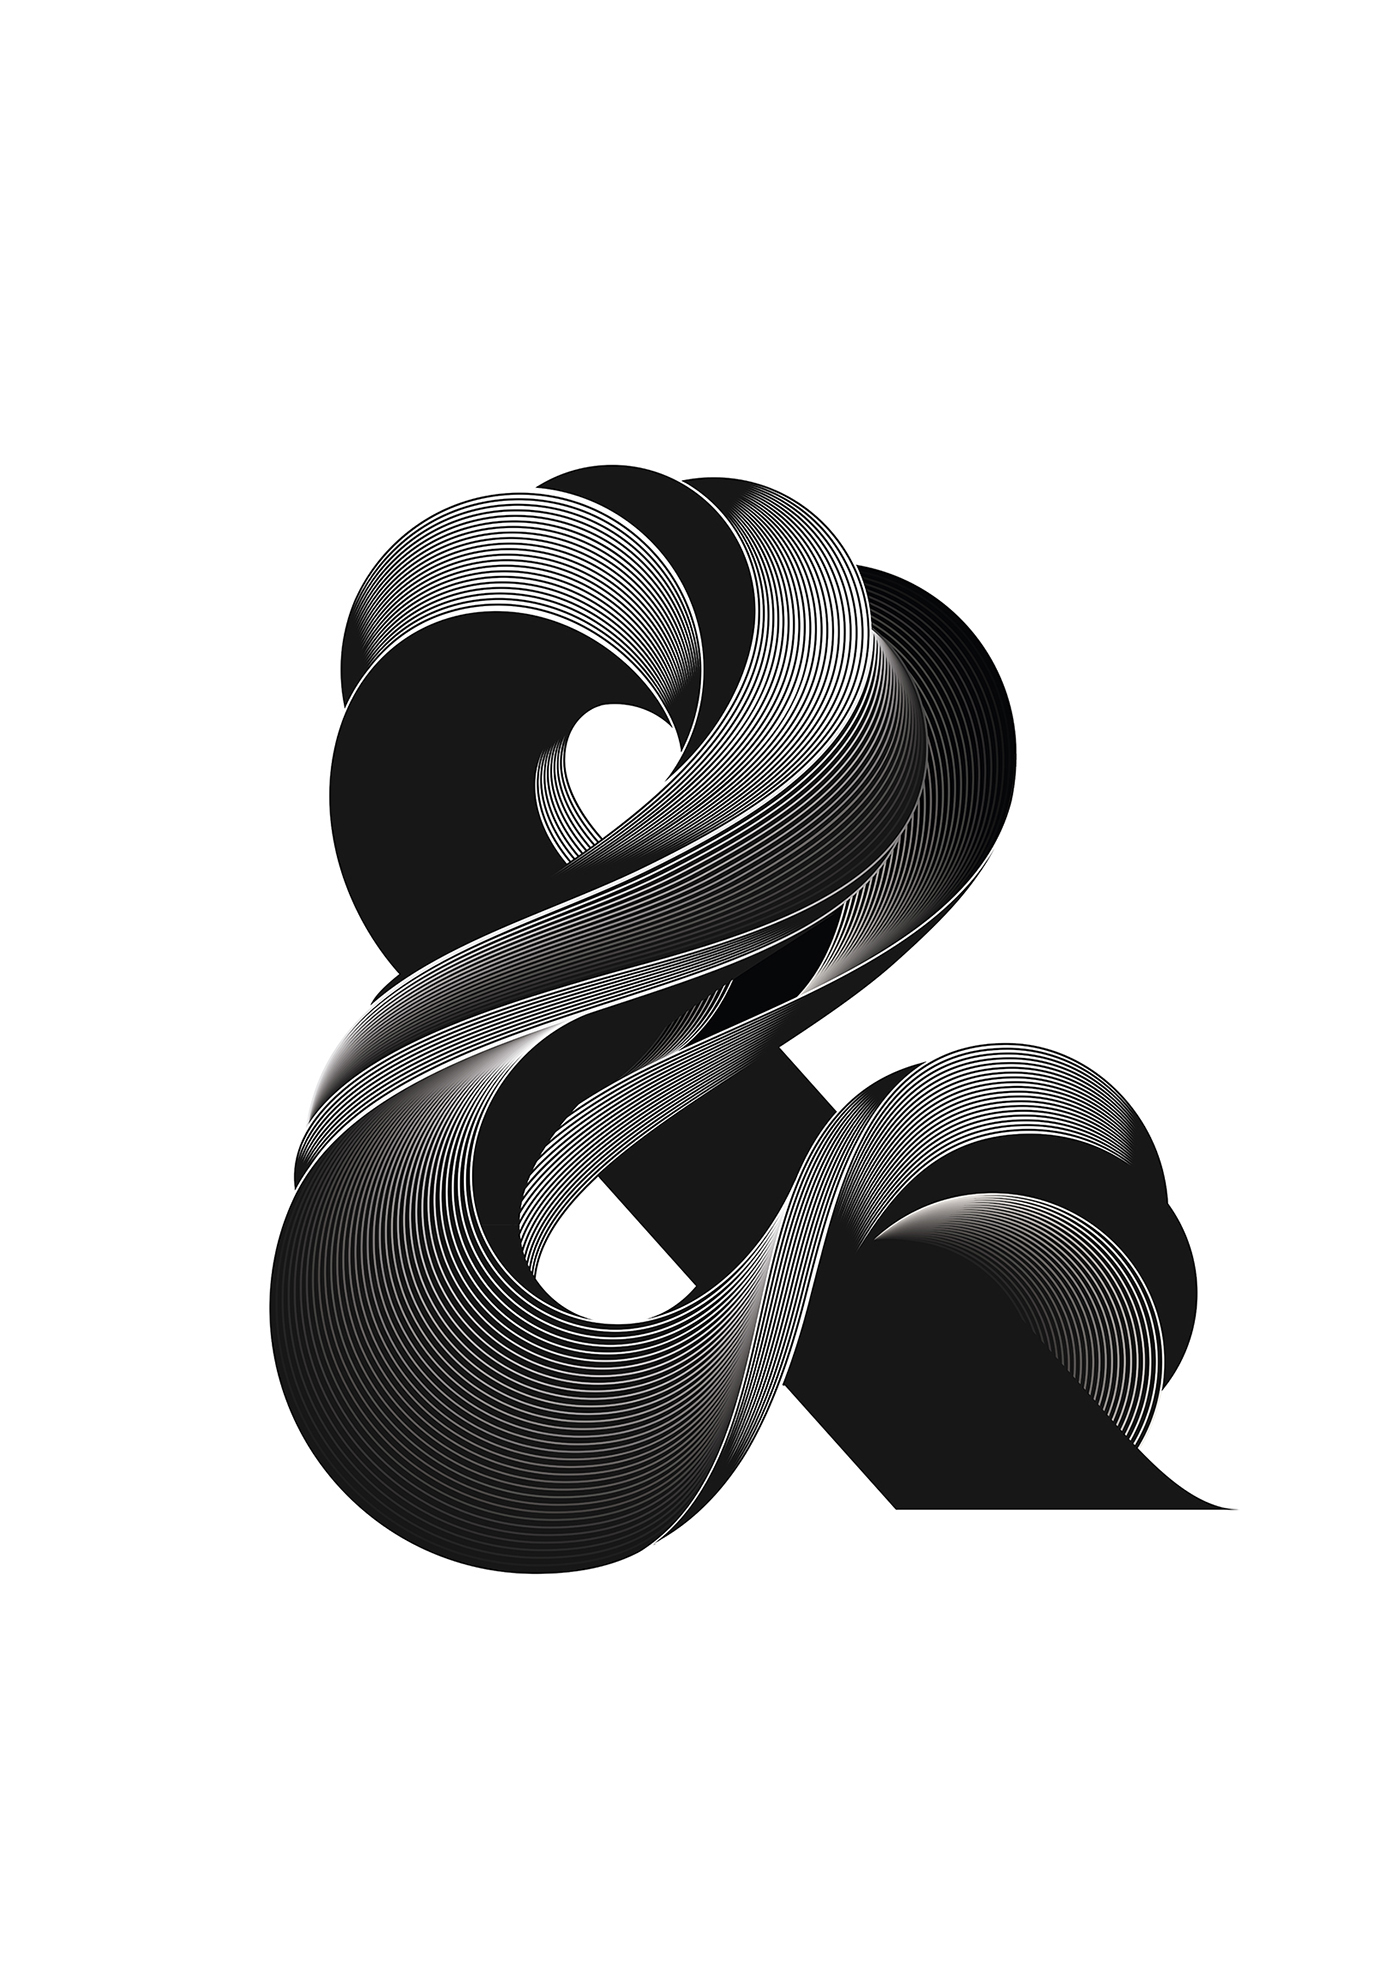 ampersand lettering lines art deco logos Icon symbol black White alphabet vector